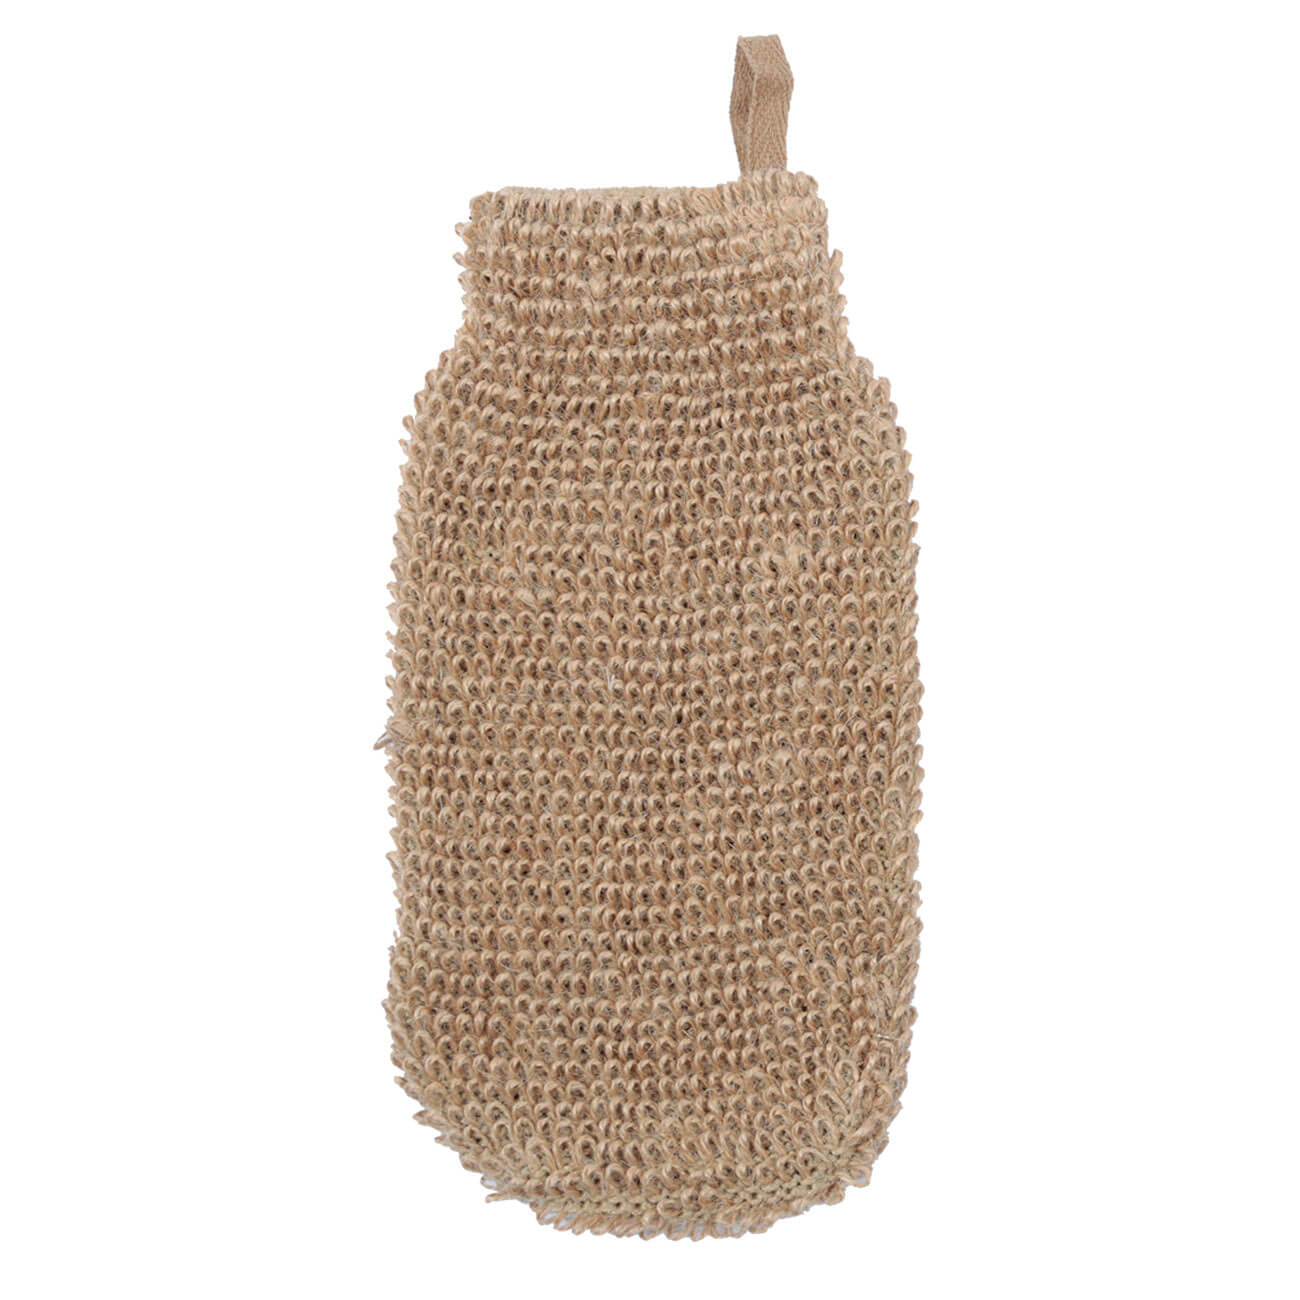 Мочалка-варежка для мытья тела, 10,5х21,5 см, конопляное волокно, бежевая, Eco life